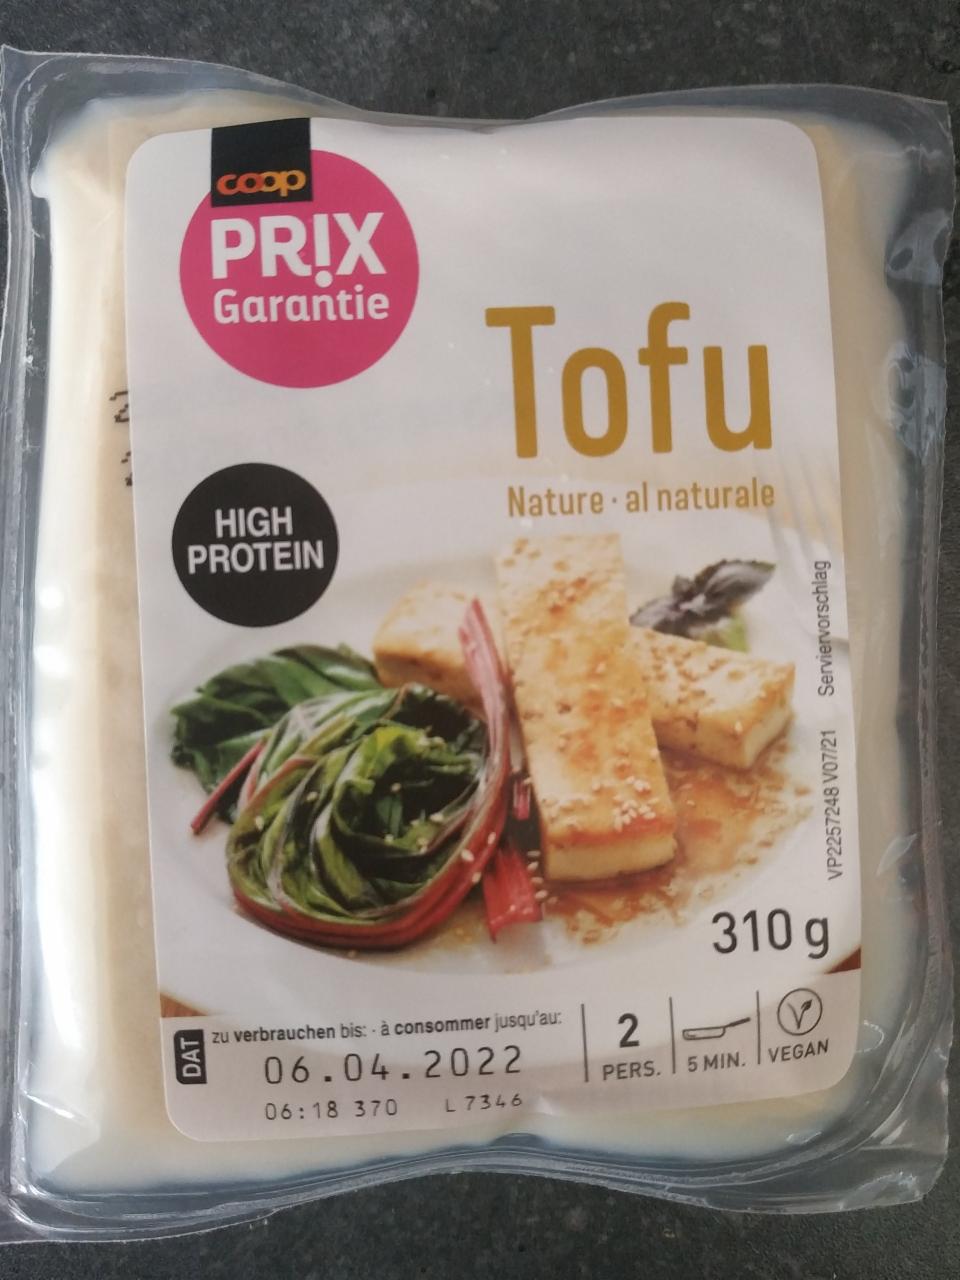 Fotografie - Tofu nature Coop Prix Garantie